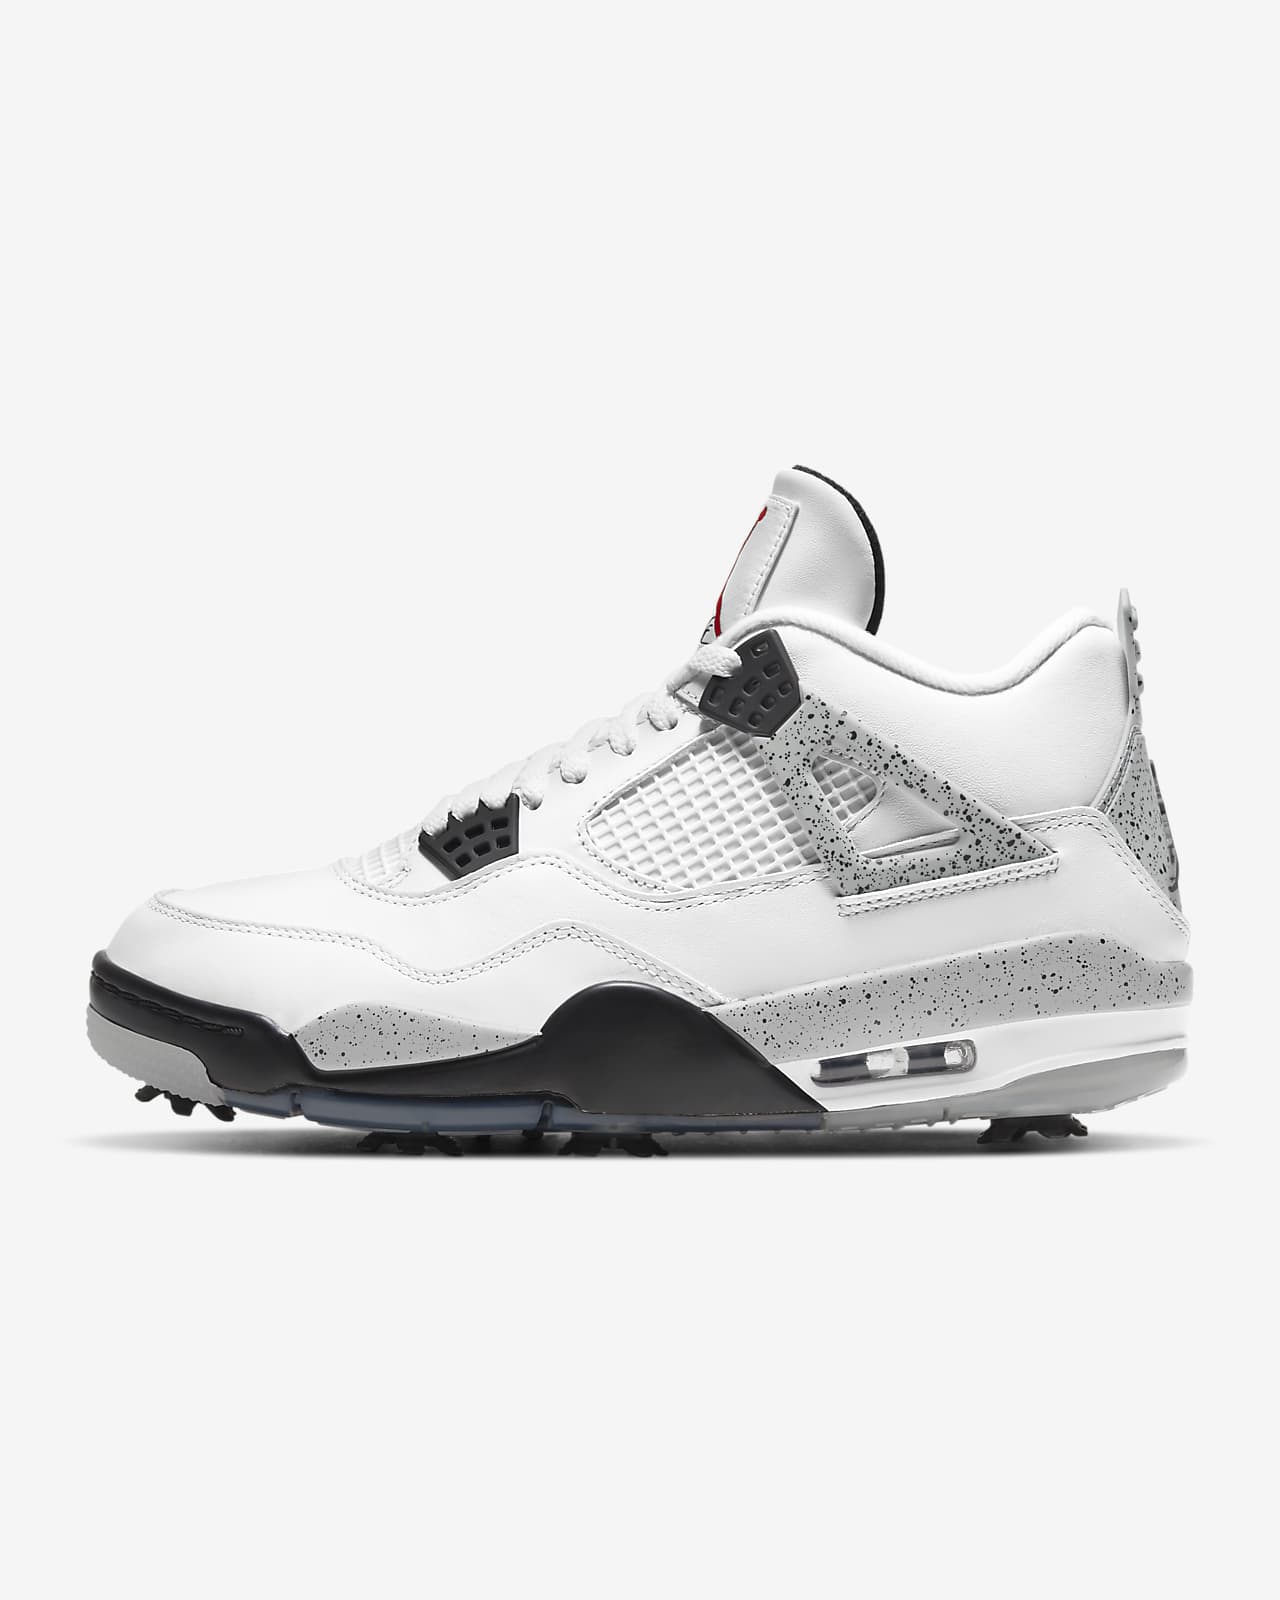 Jordan 4 G Golf Shoes